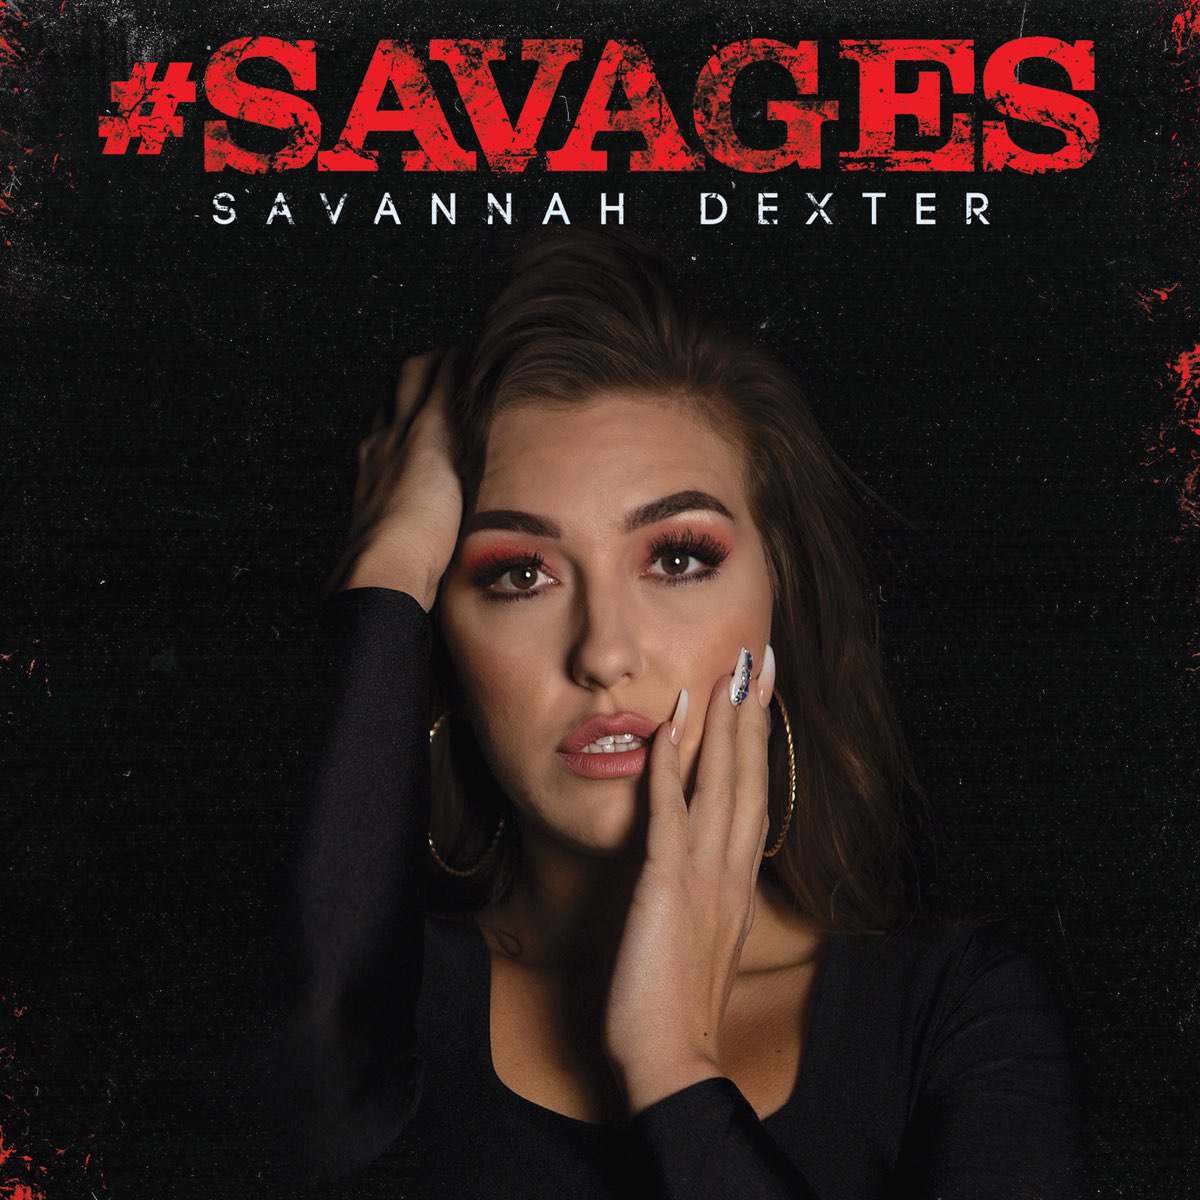 ‎Savages by Savannah Dexter on Apple Music